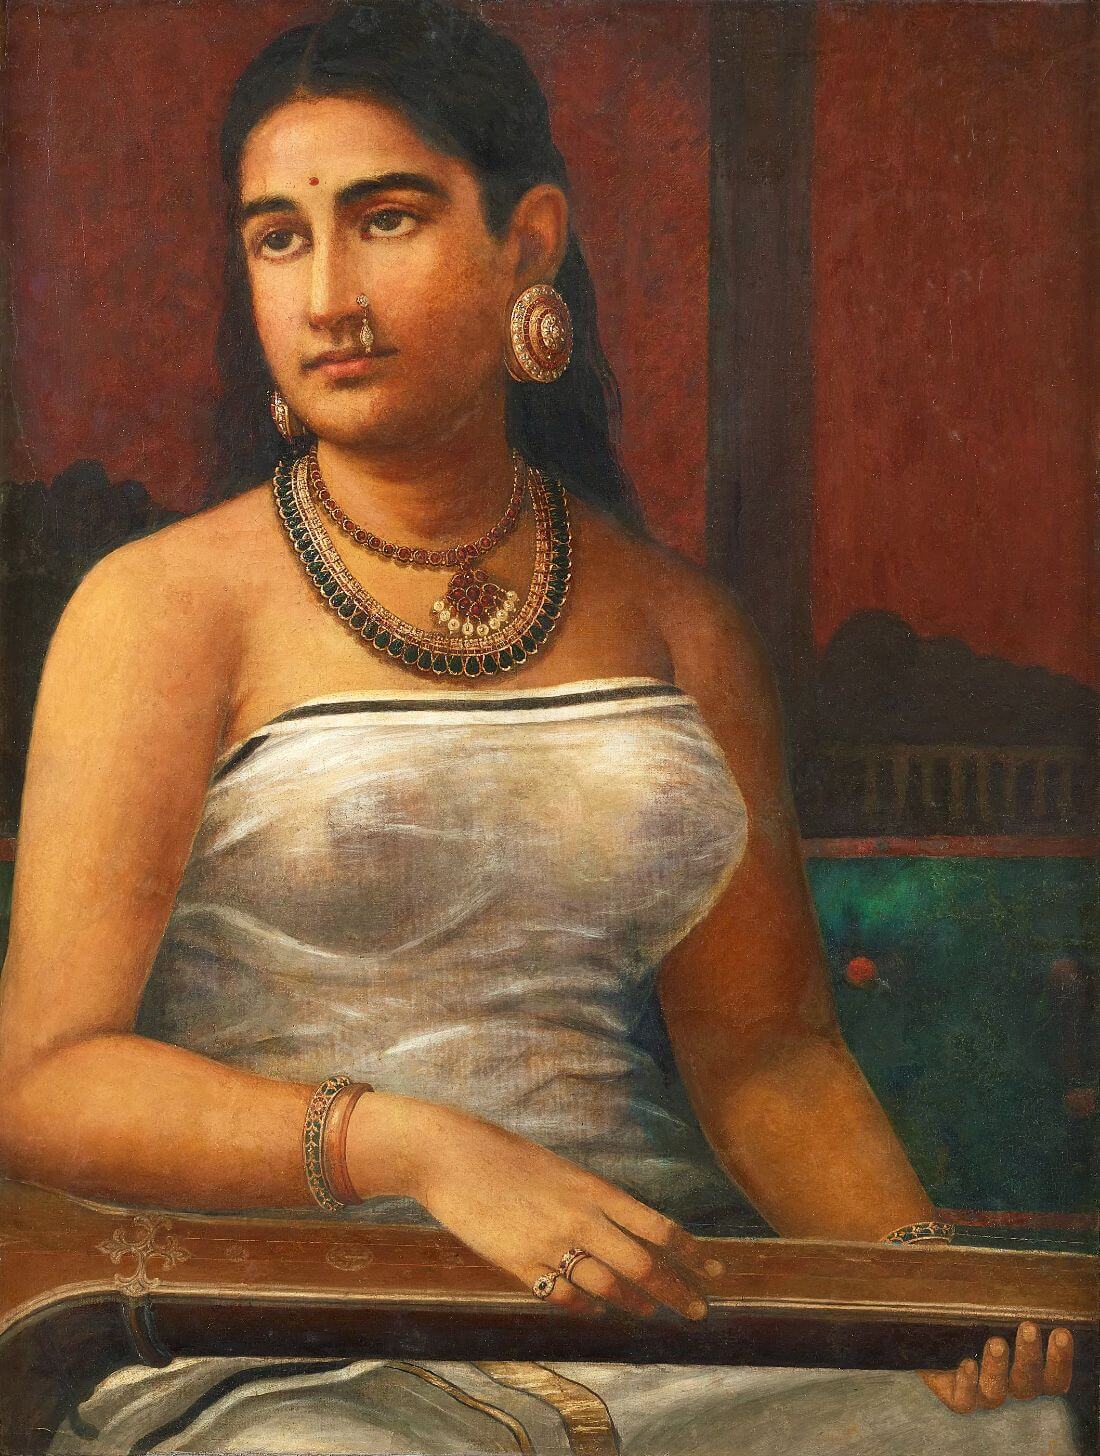 Lady Holding Veena - Raja Ravi Varma - Famous Indian Painting ...